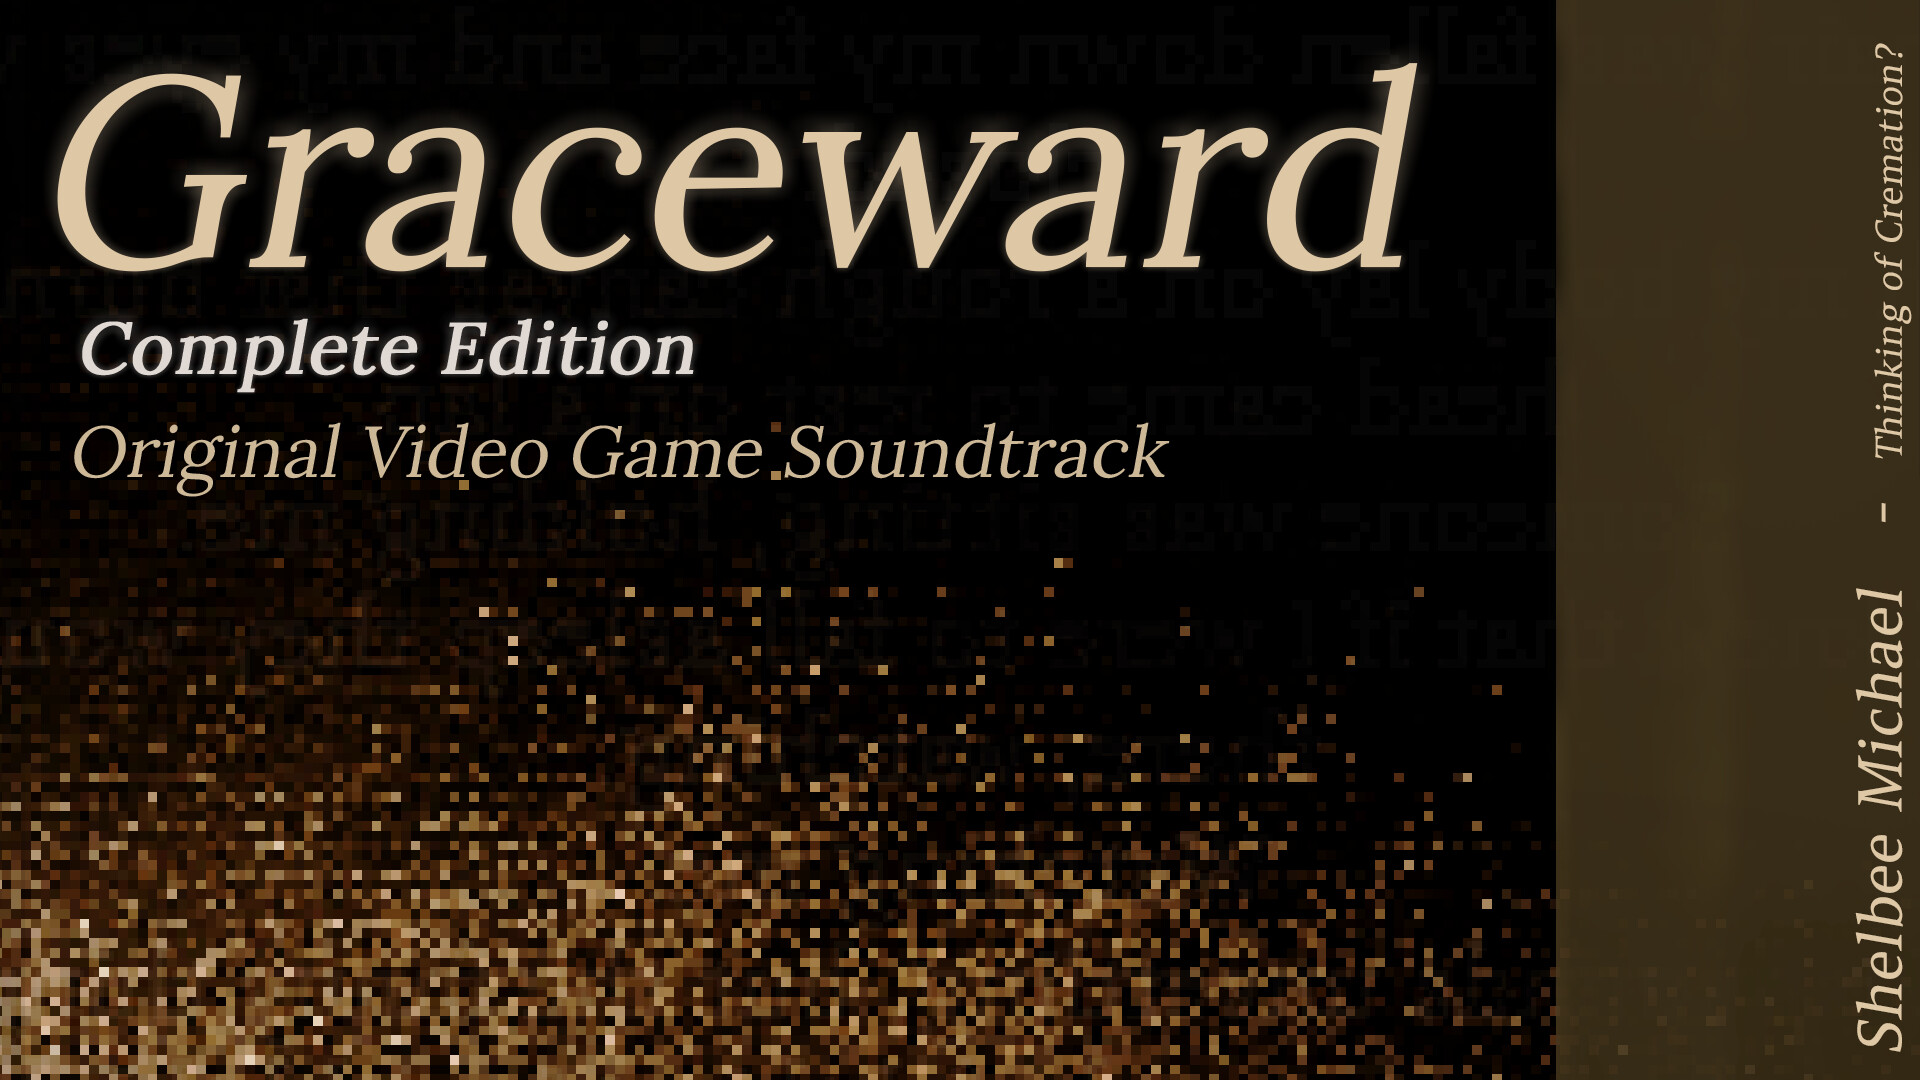 Graceward - Complete Edition Soundtrack Featured Screenshot #1